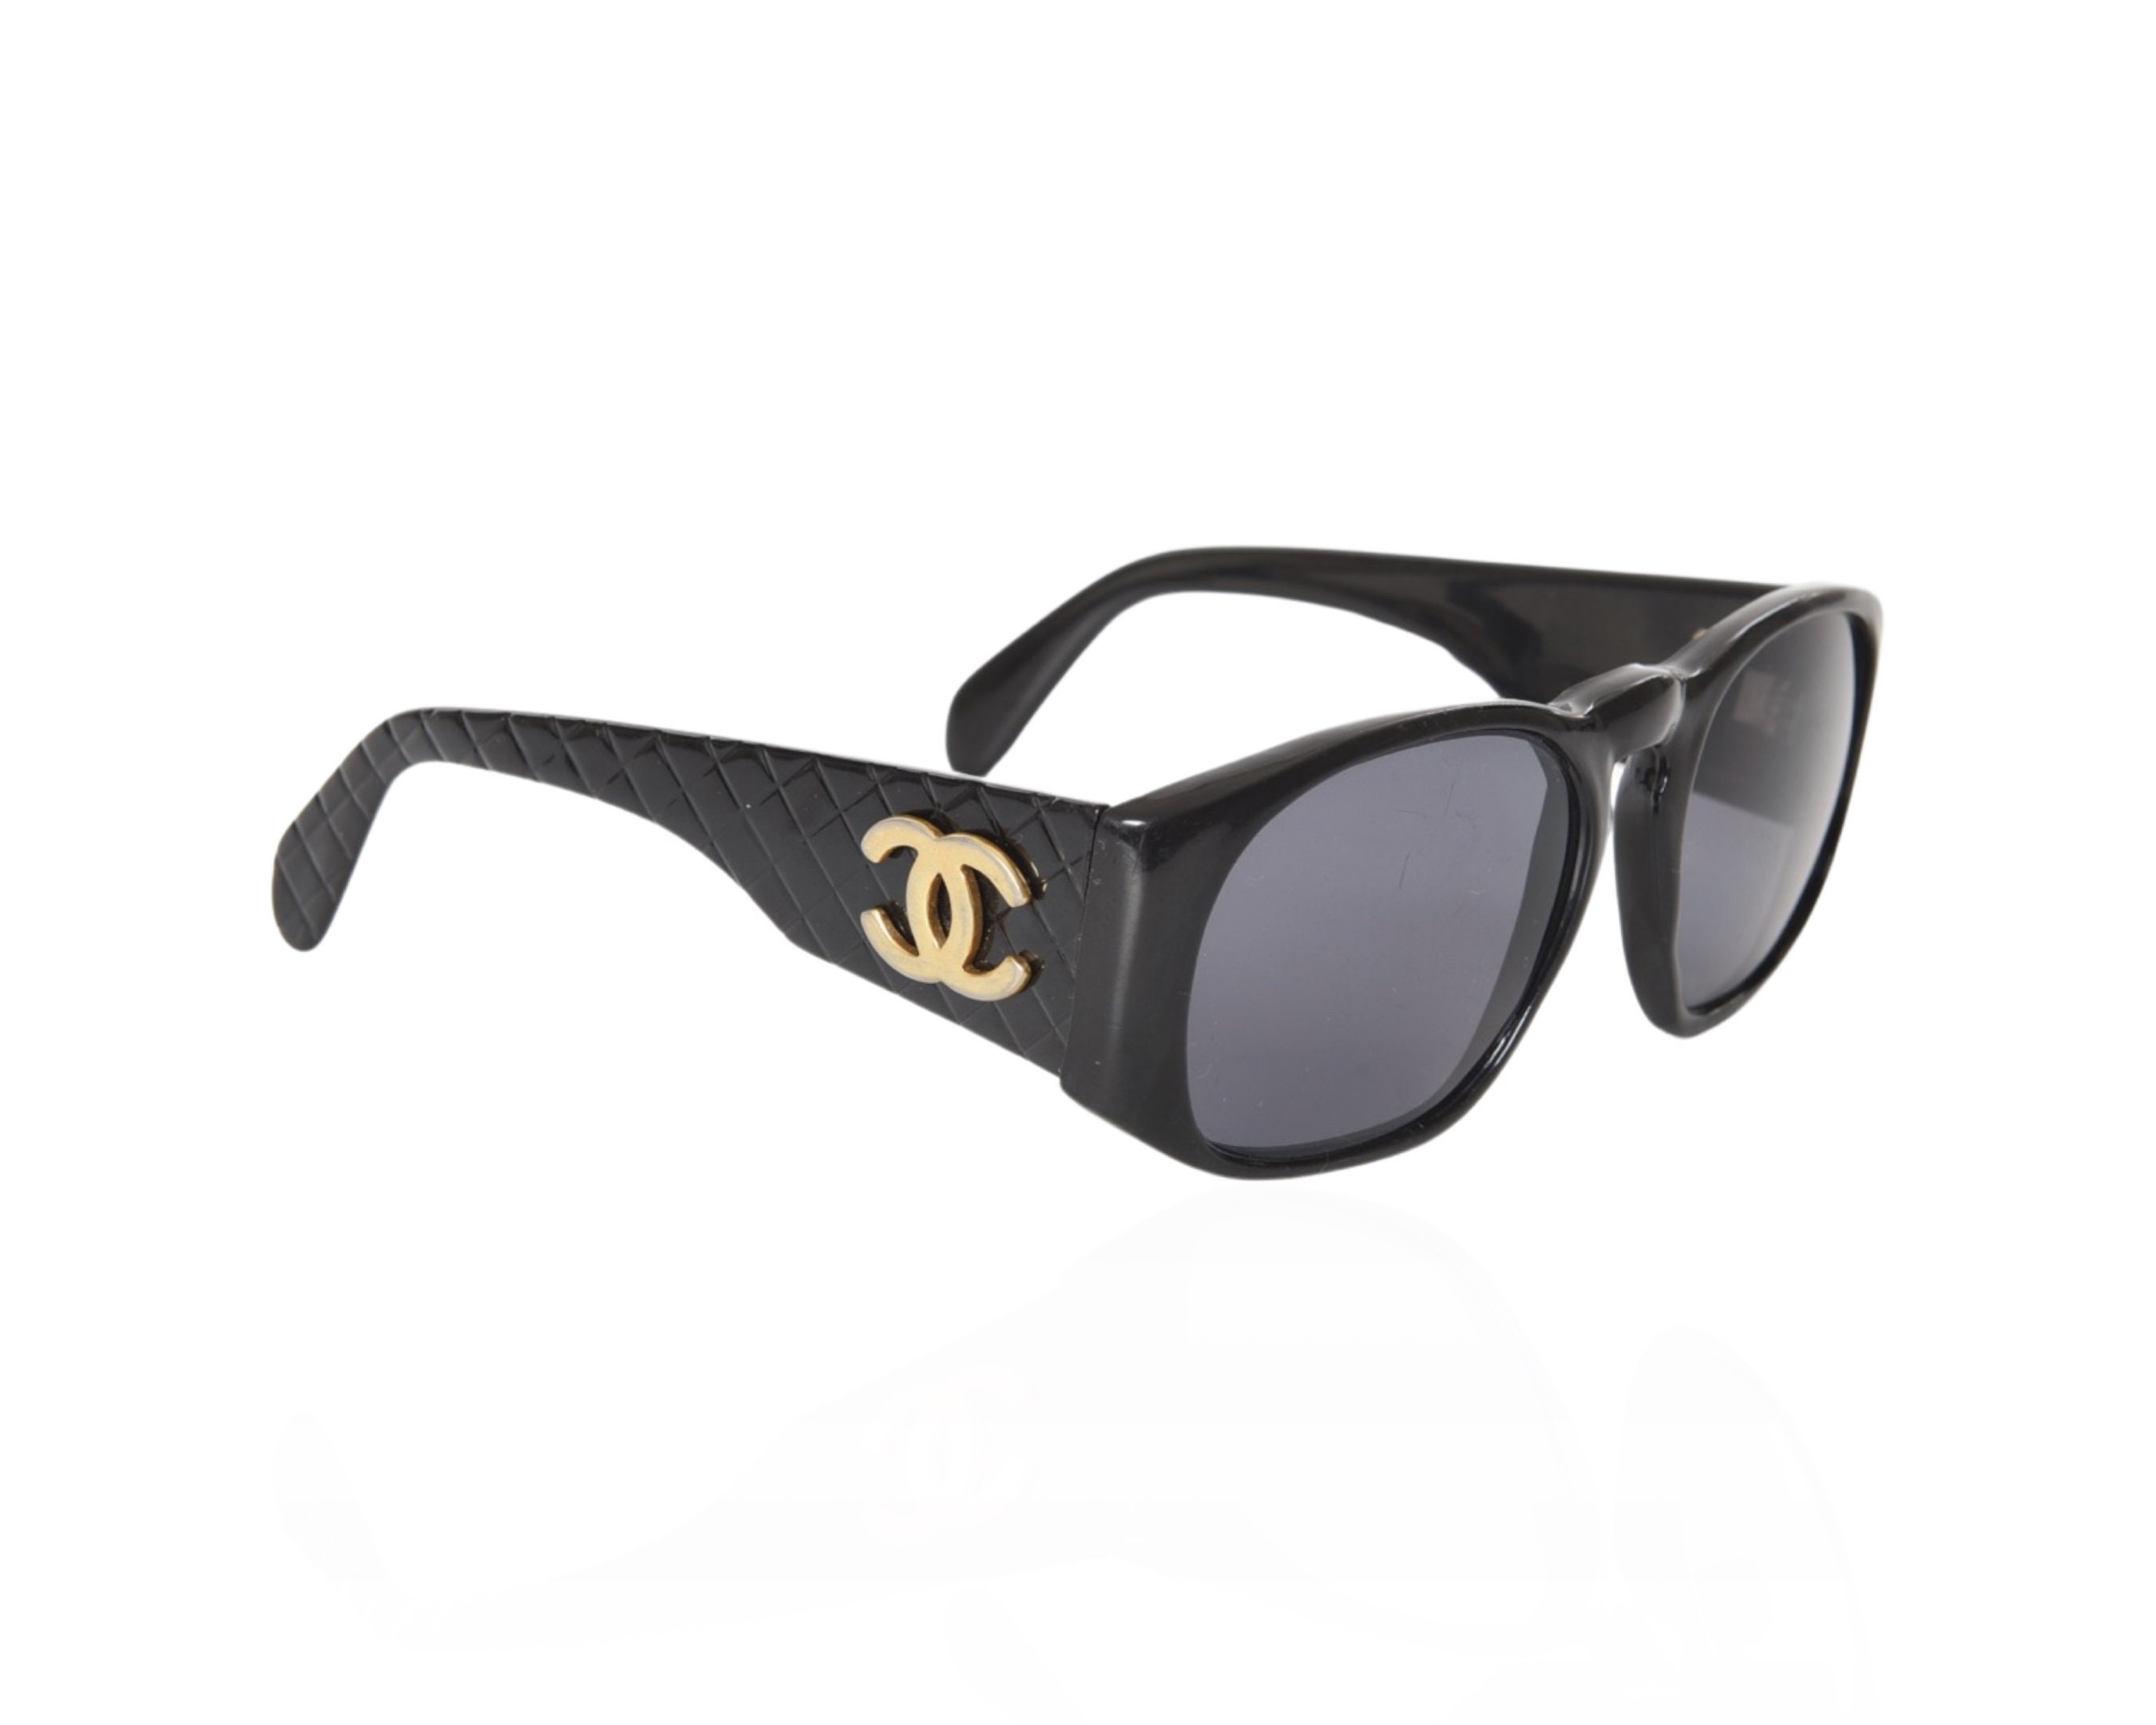 Chanel Logo Glasses 